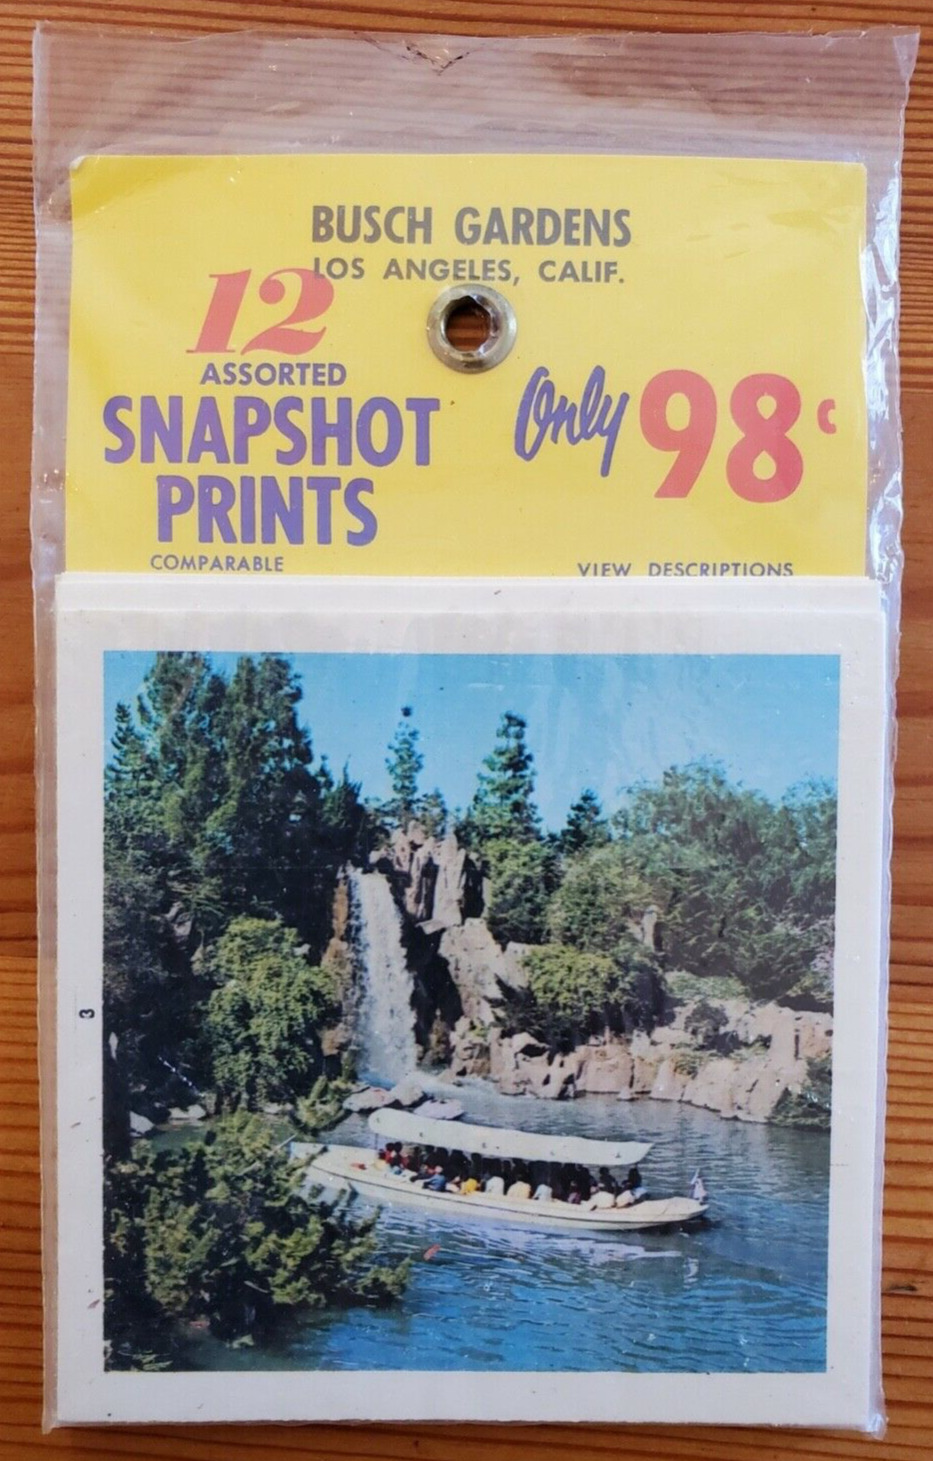 Vintage Busch Gardens Los Angeles Souvenir Snapshot Prints Original Package